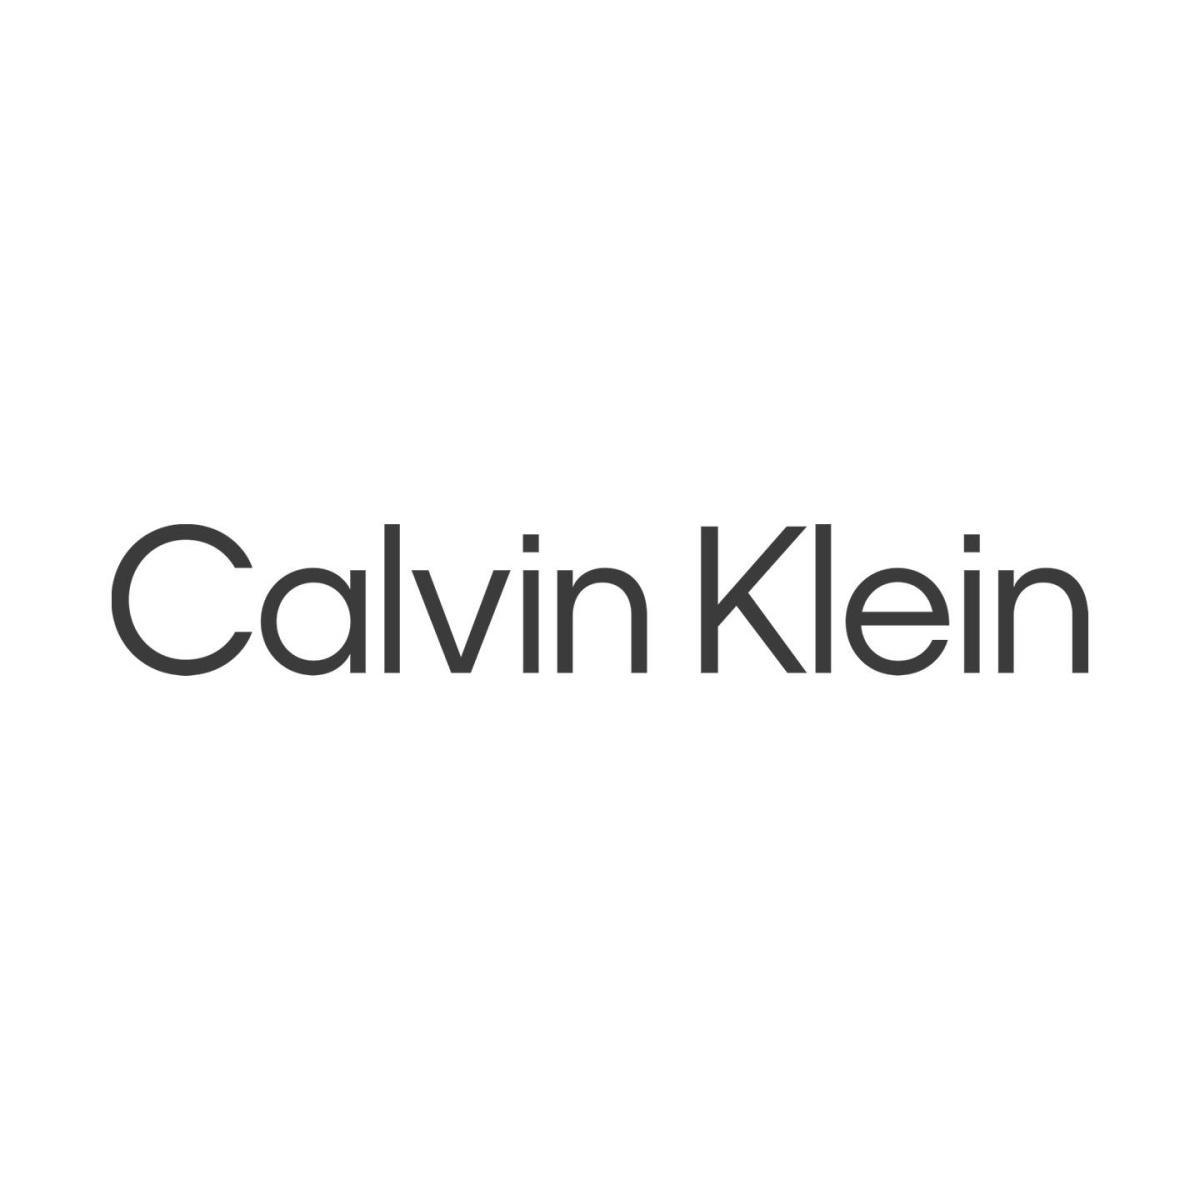 Calvin Klein Mens @ South Premium Outlet Mall